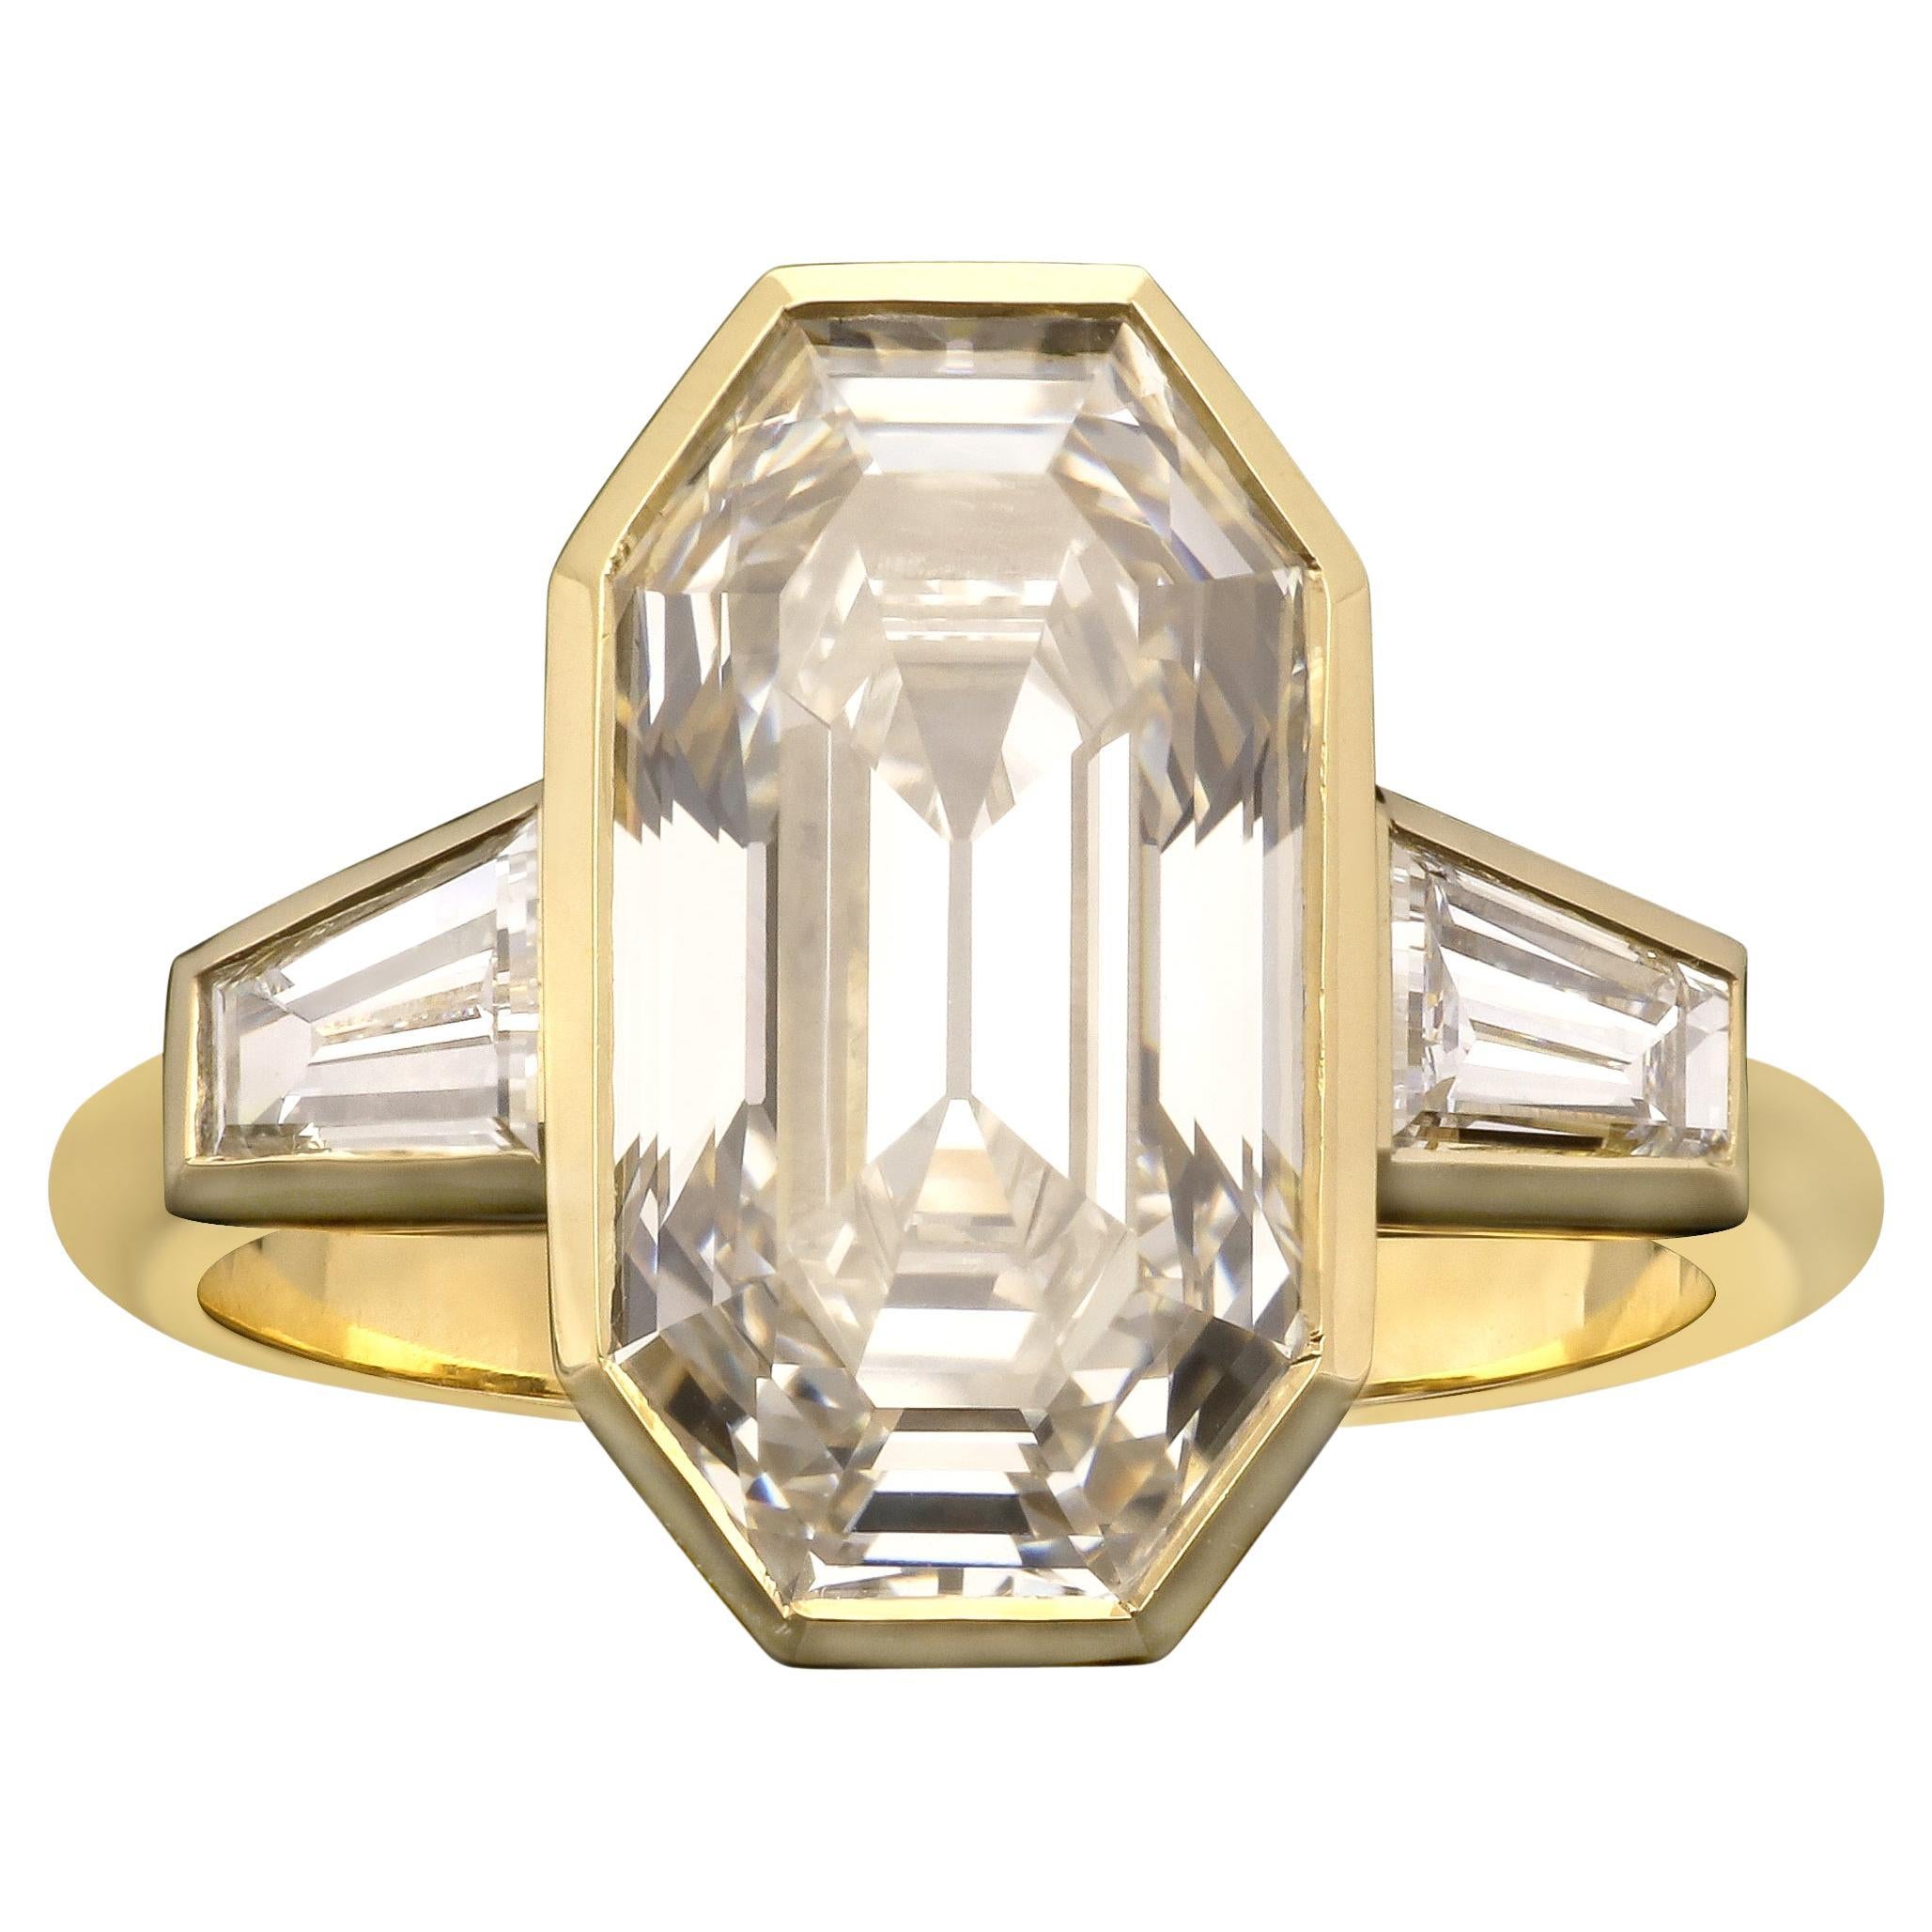 Hancocks 5.38ct Old Emerald Cut Diamond Bezel Set Gold Ring Tapered Shoulders For Sale